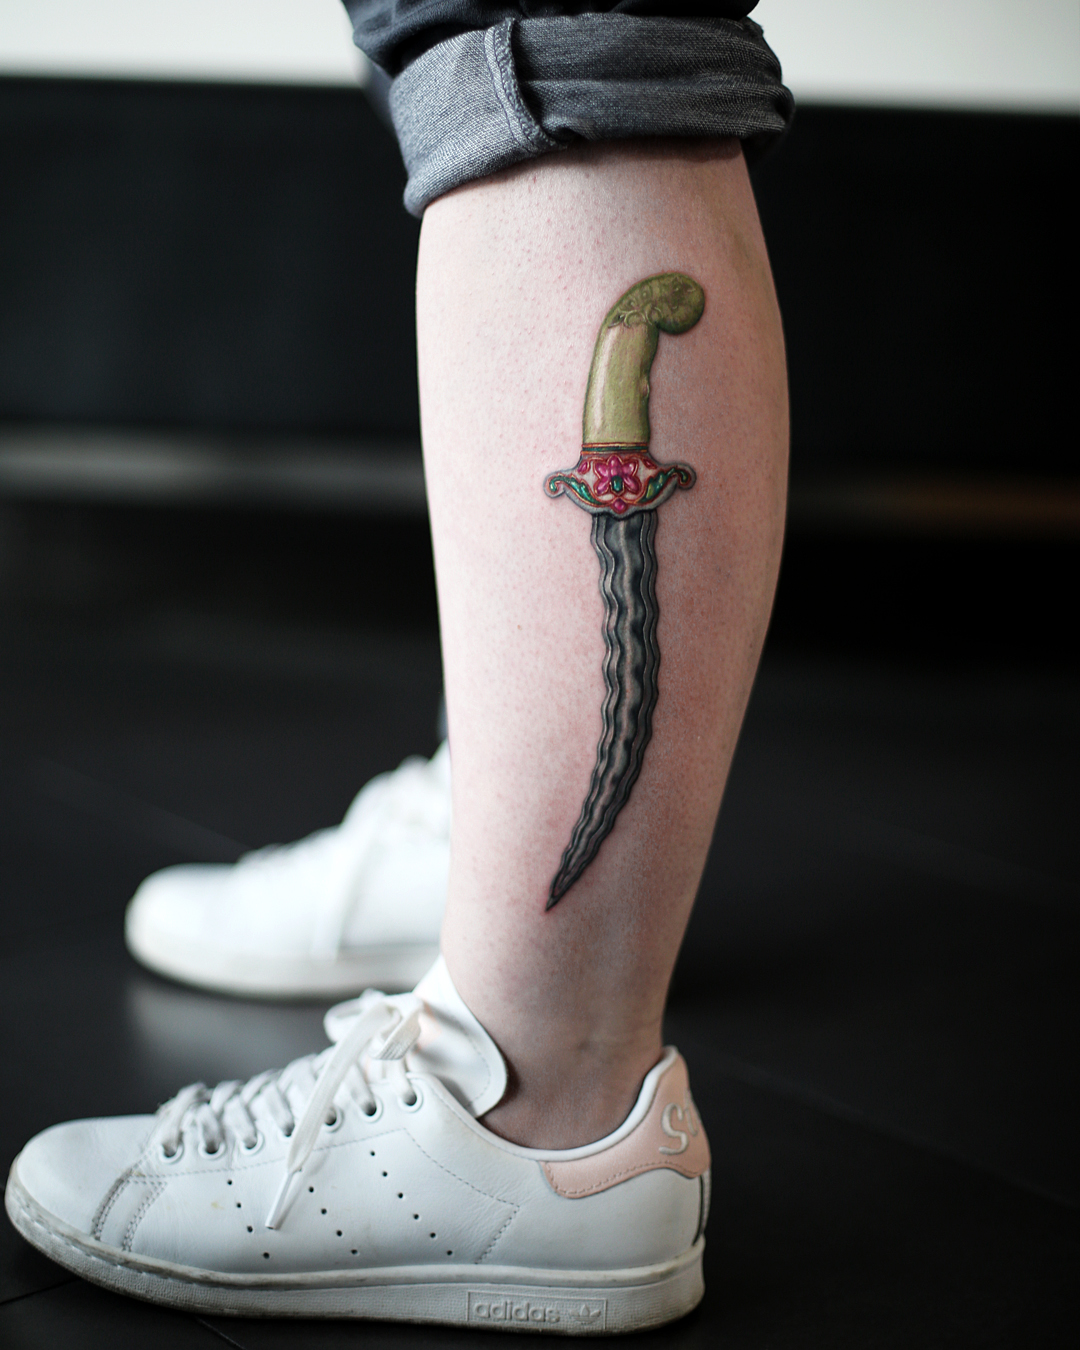 Knife tattoo located on the inner arm, blackwork style.